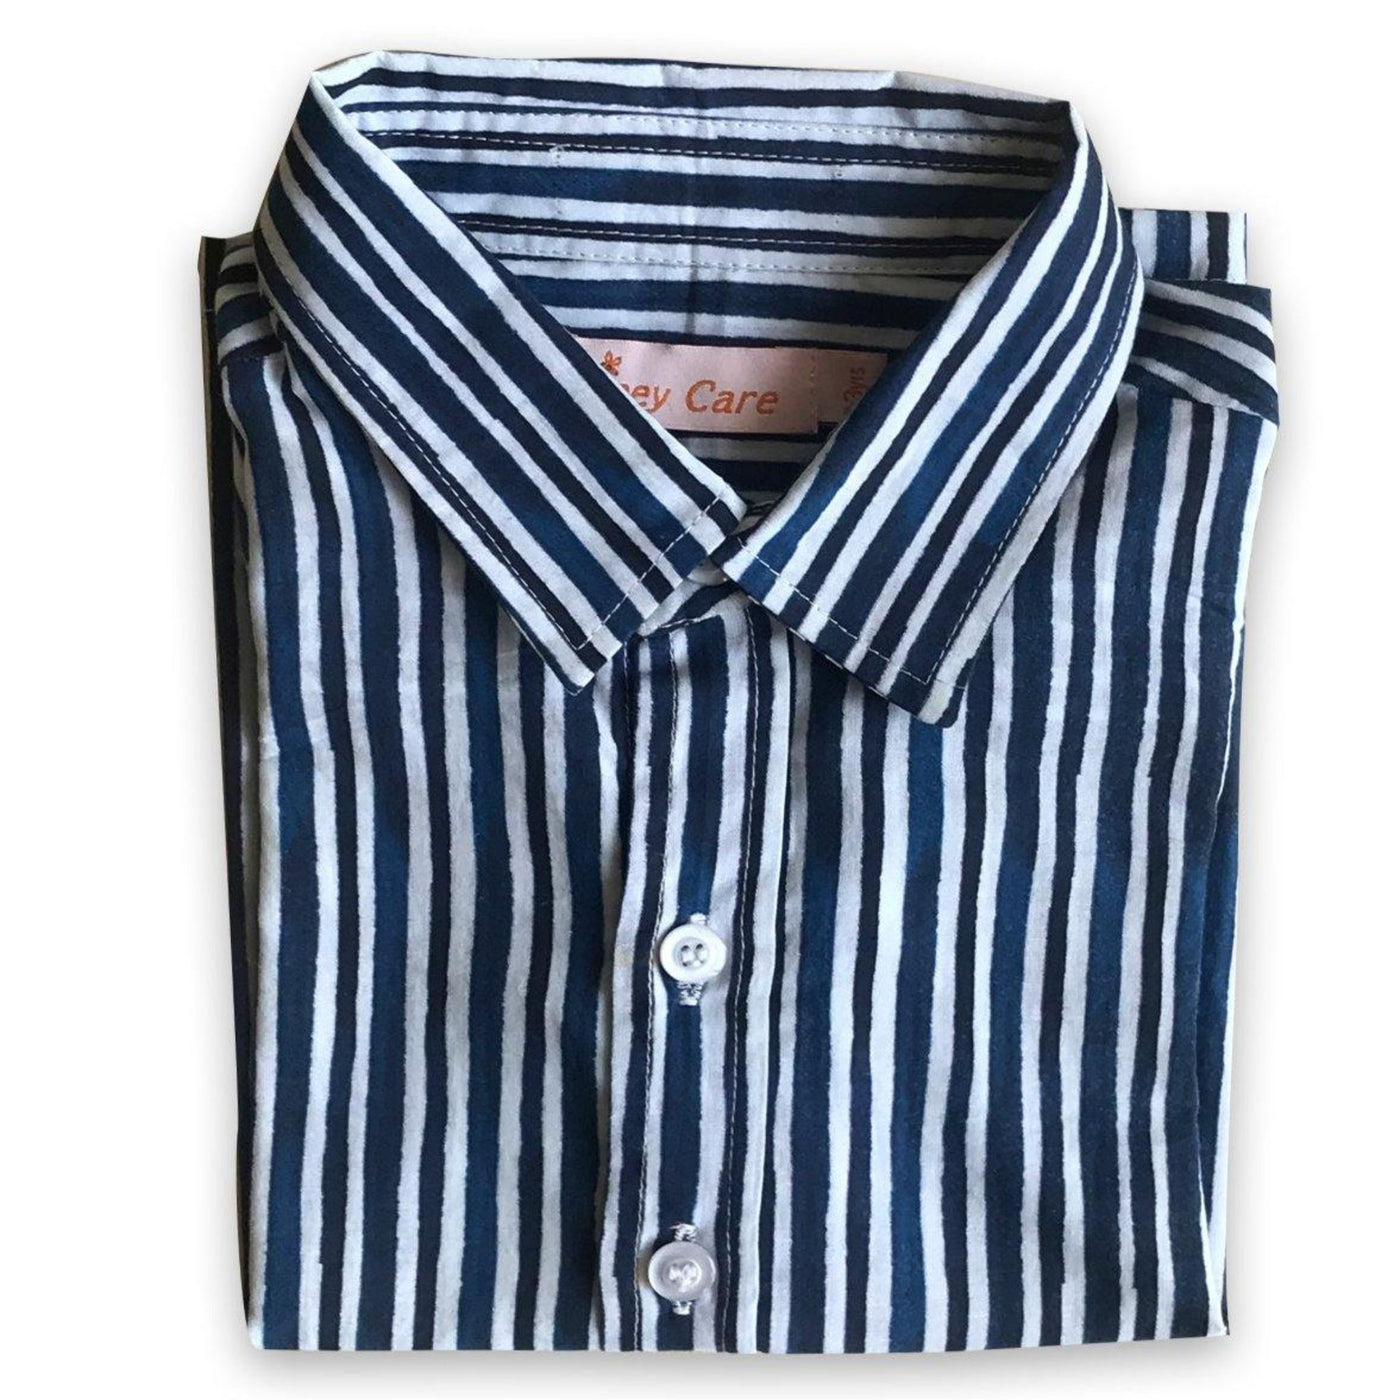 Shirts for boys - Indigo Stripes Joeycare 